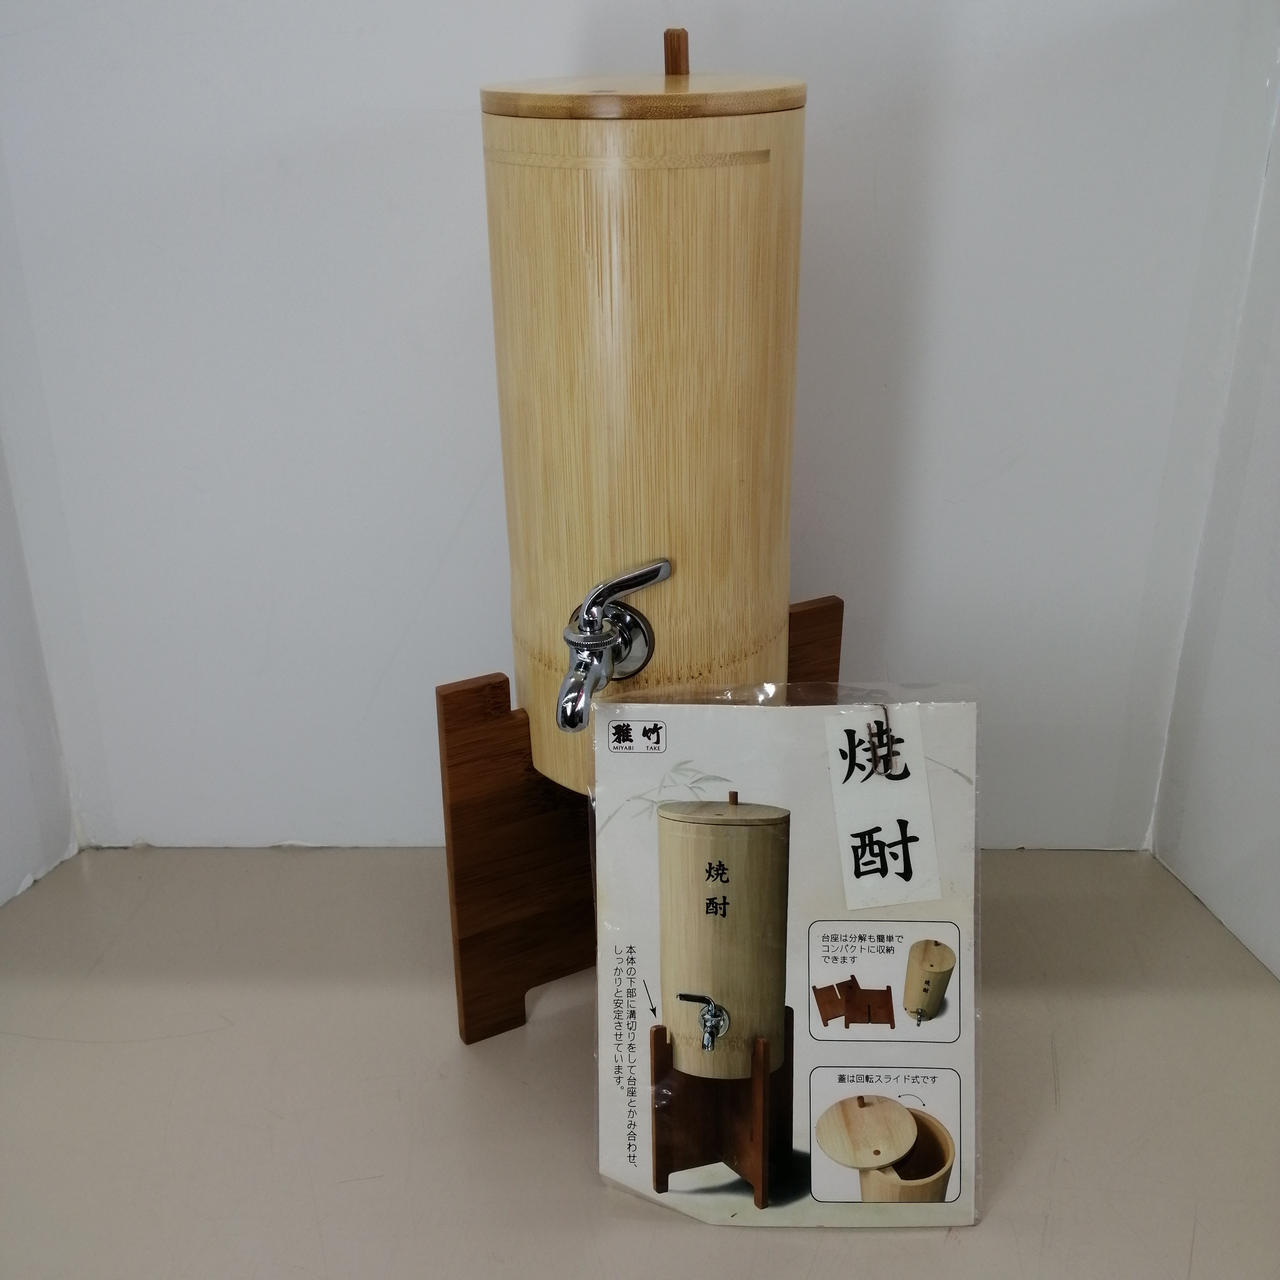 Sake vessel Yazhu Wine Vessel from Japan